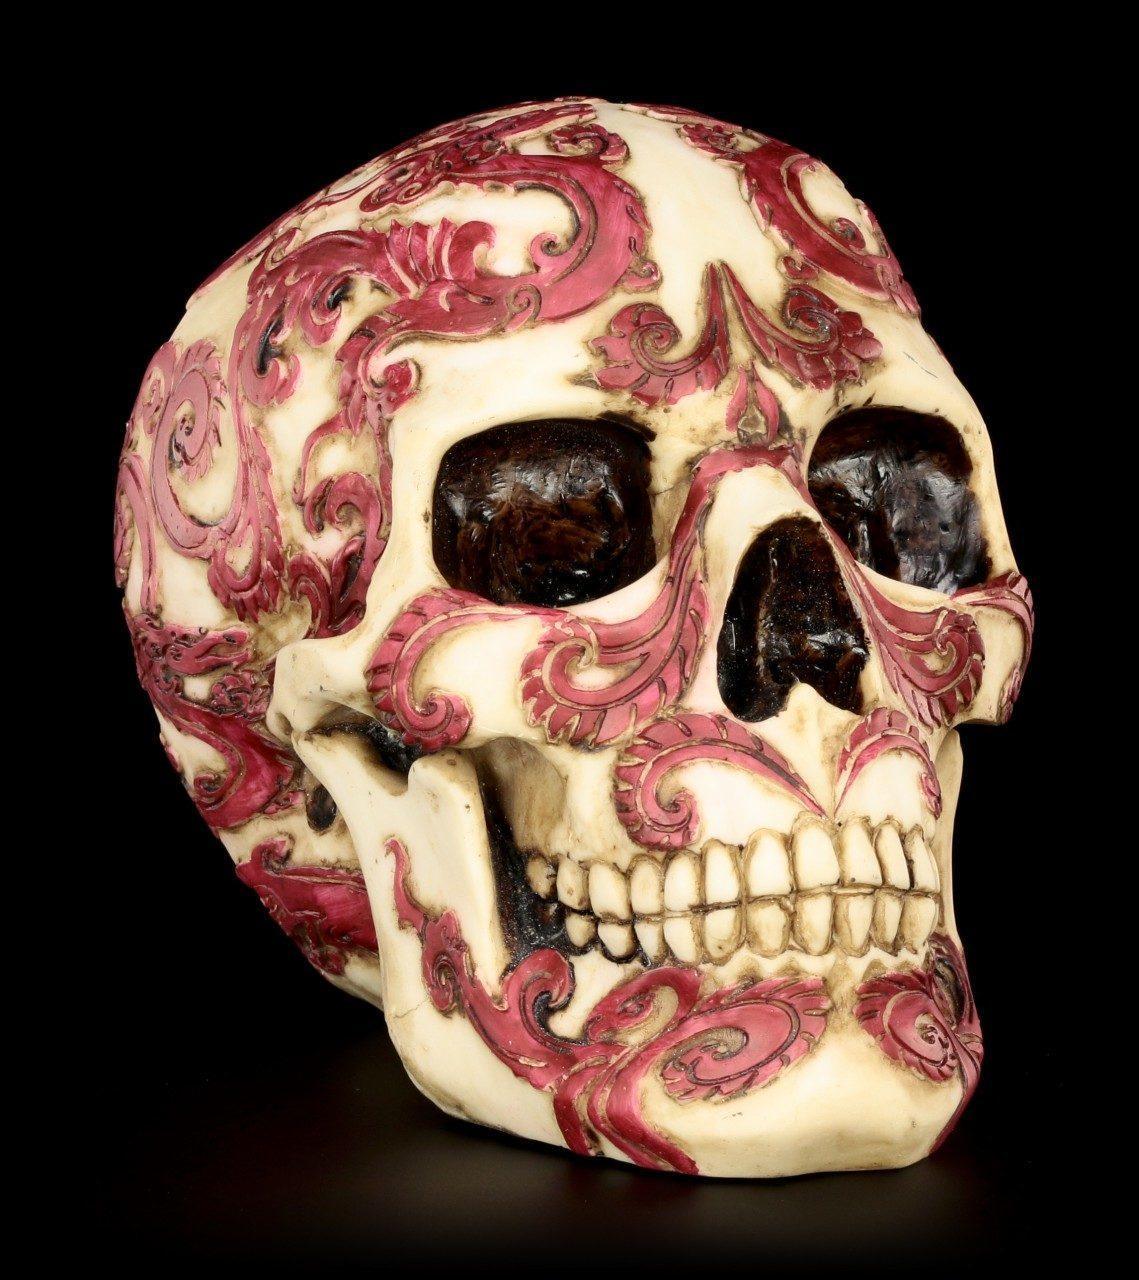 Oriental Skull by Anne Stokes